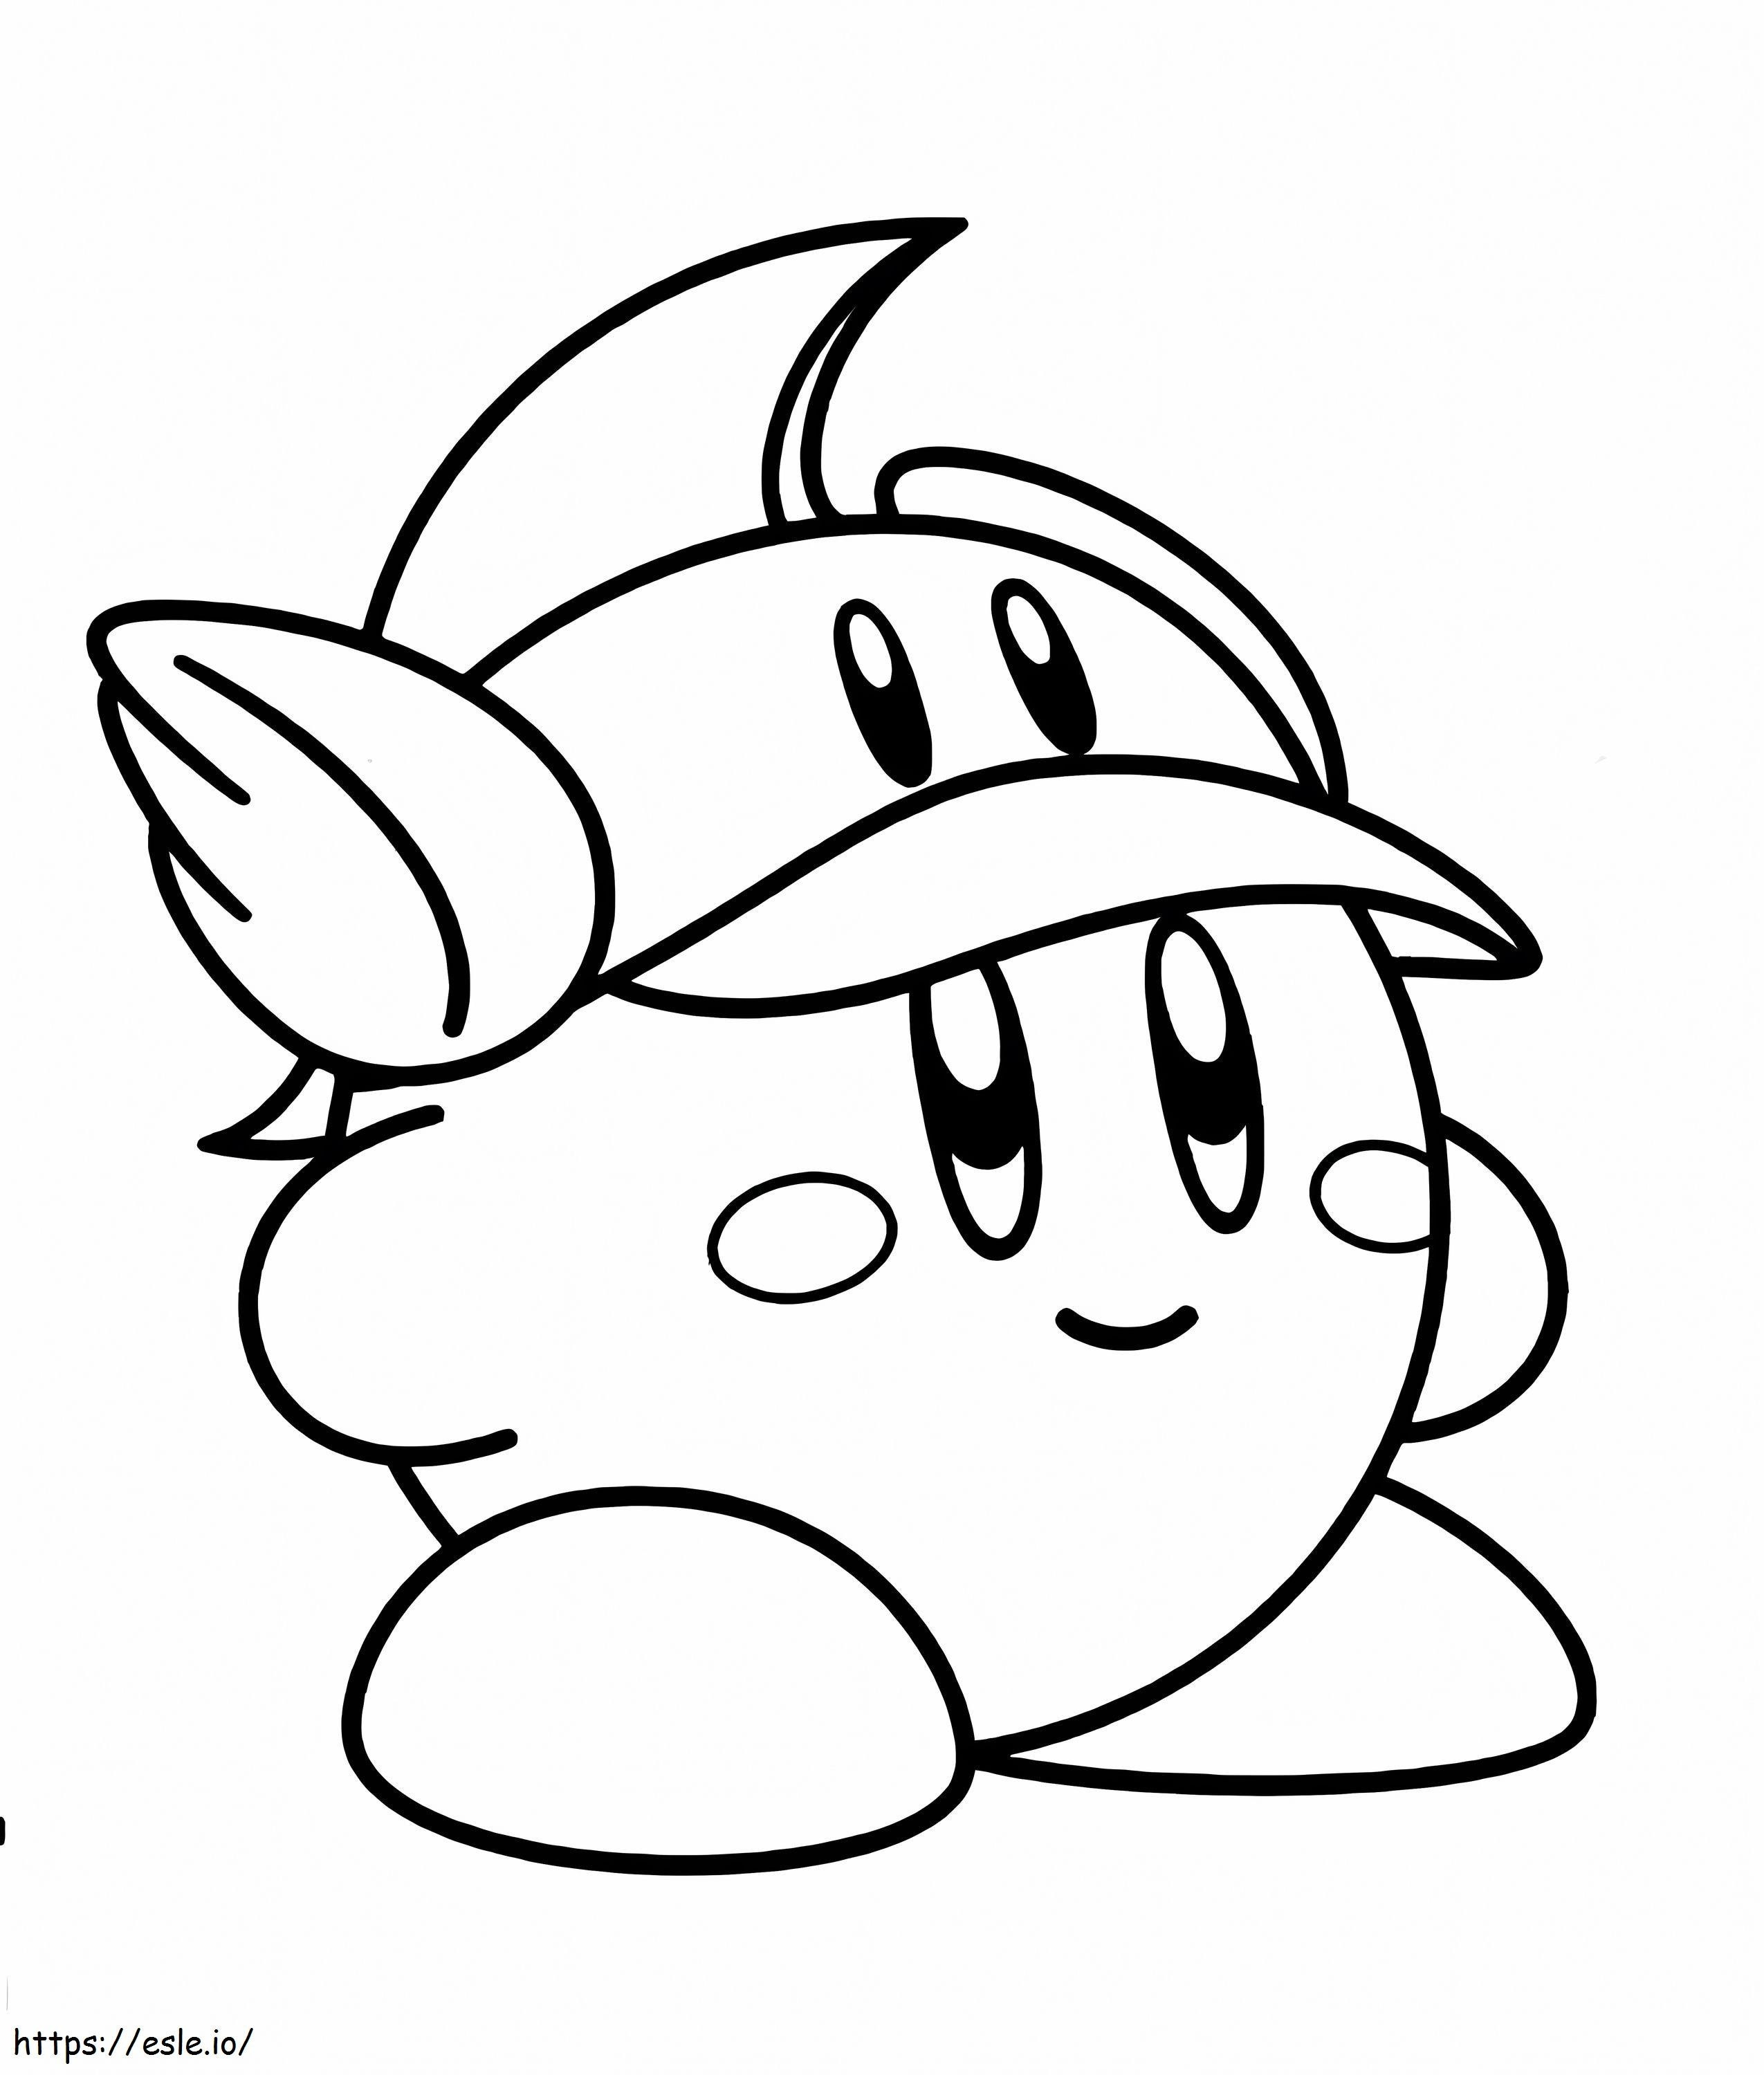 Jó Kirby! kifestő